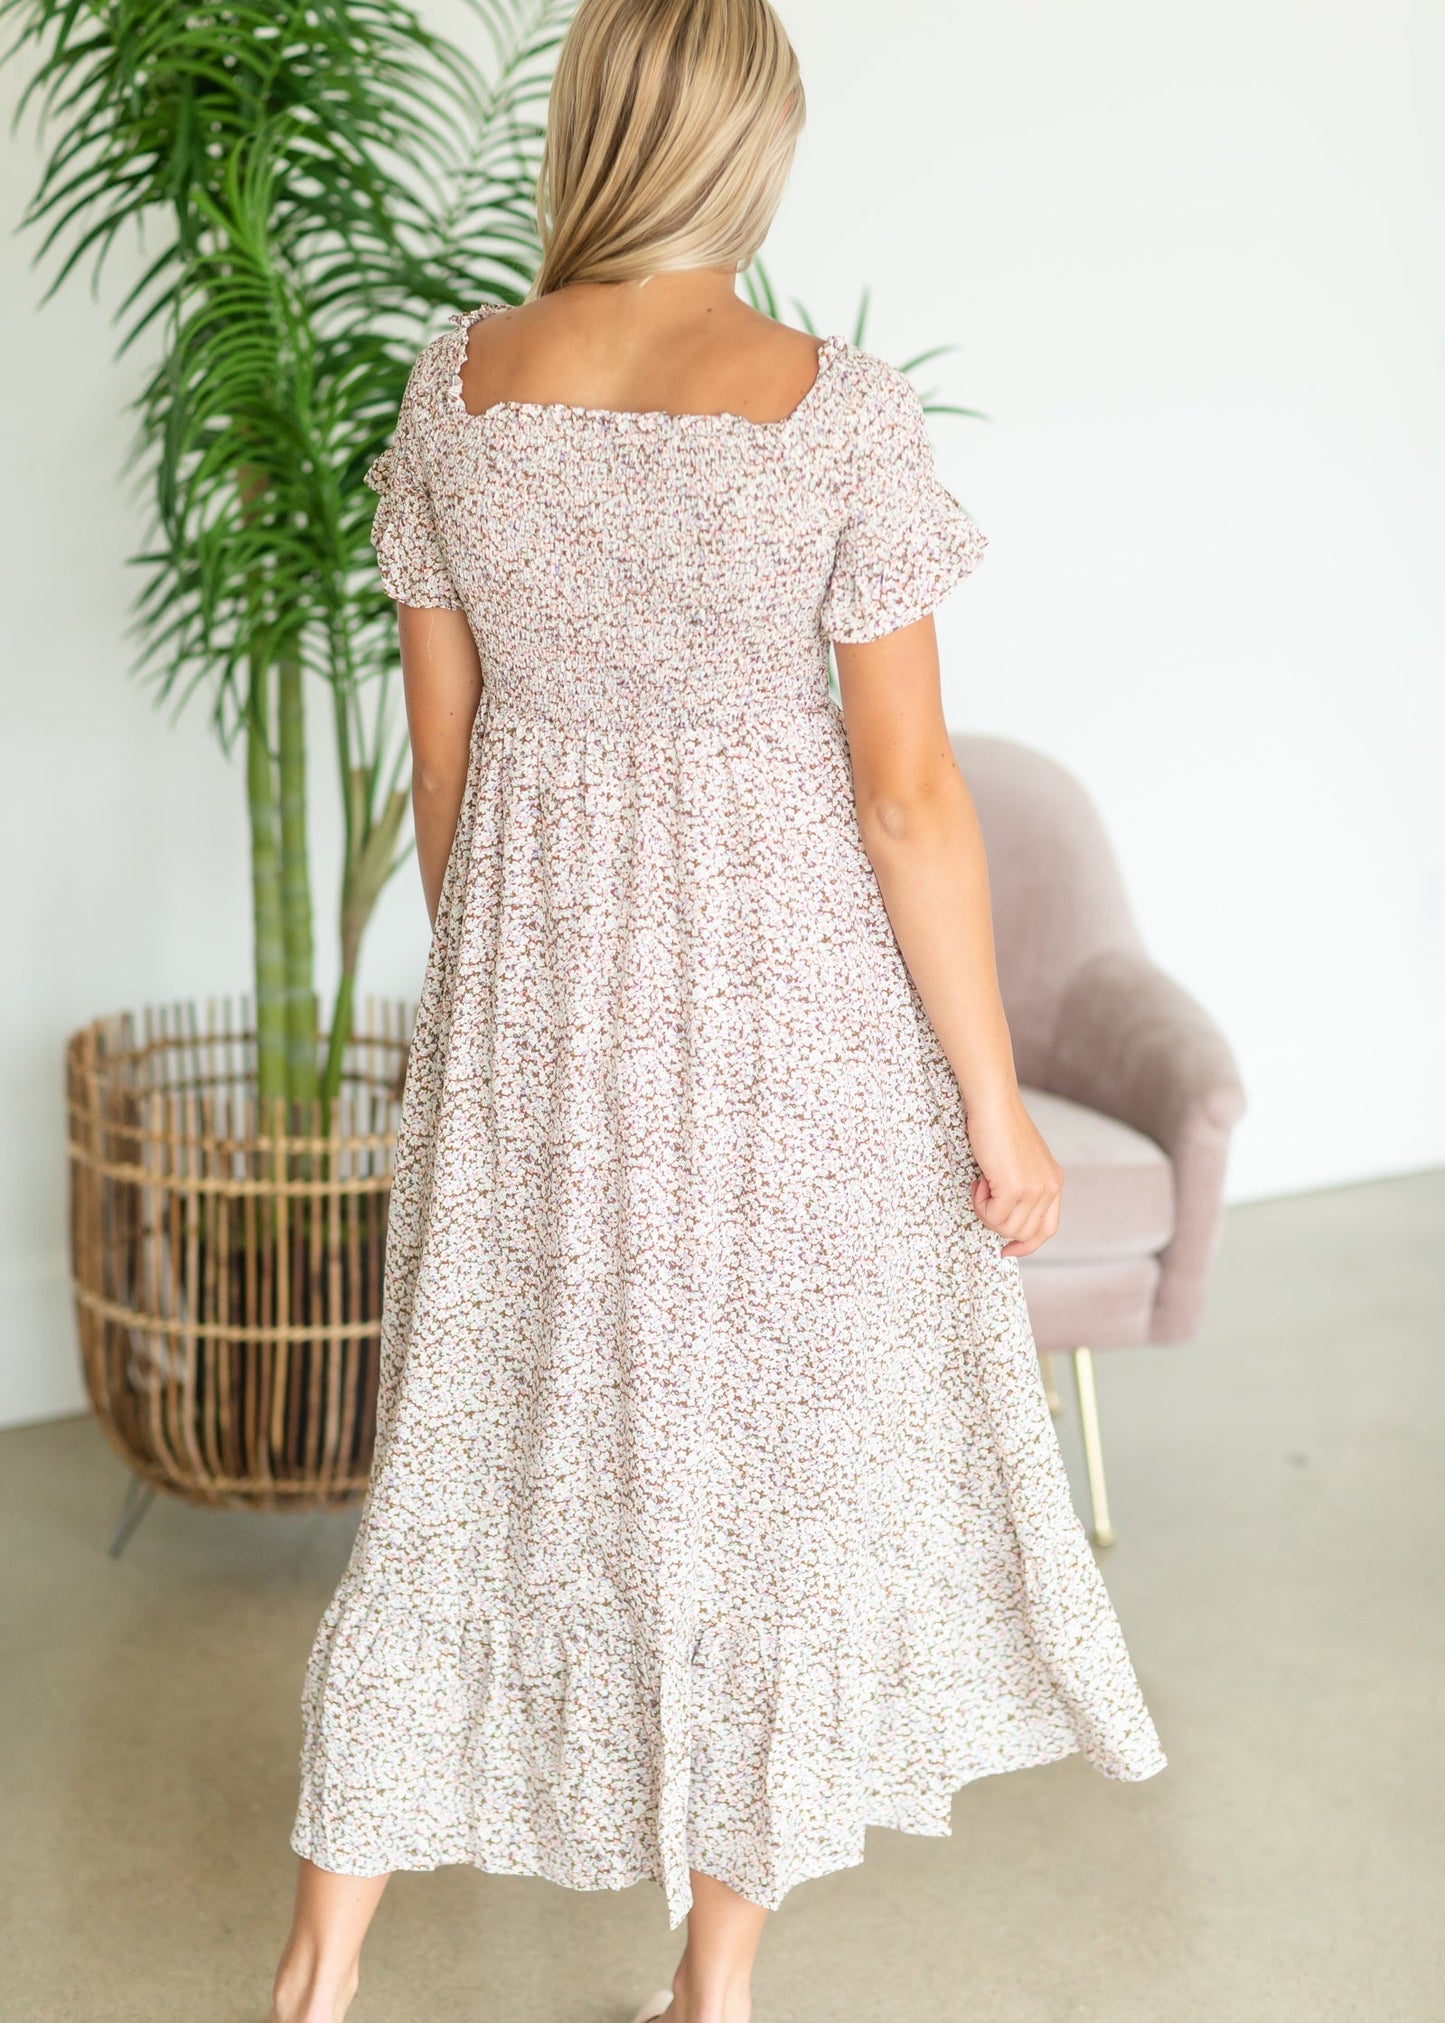 Smocked Short Sleeve Maxi Dress - FINAL SALE Dresses